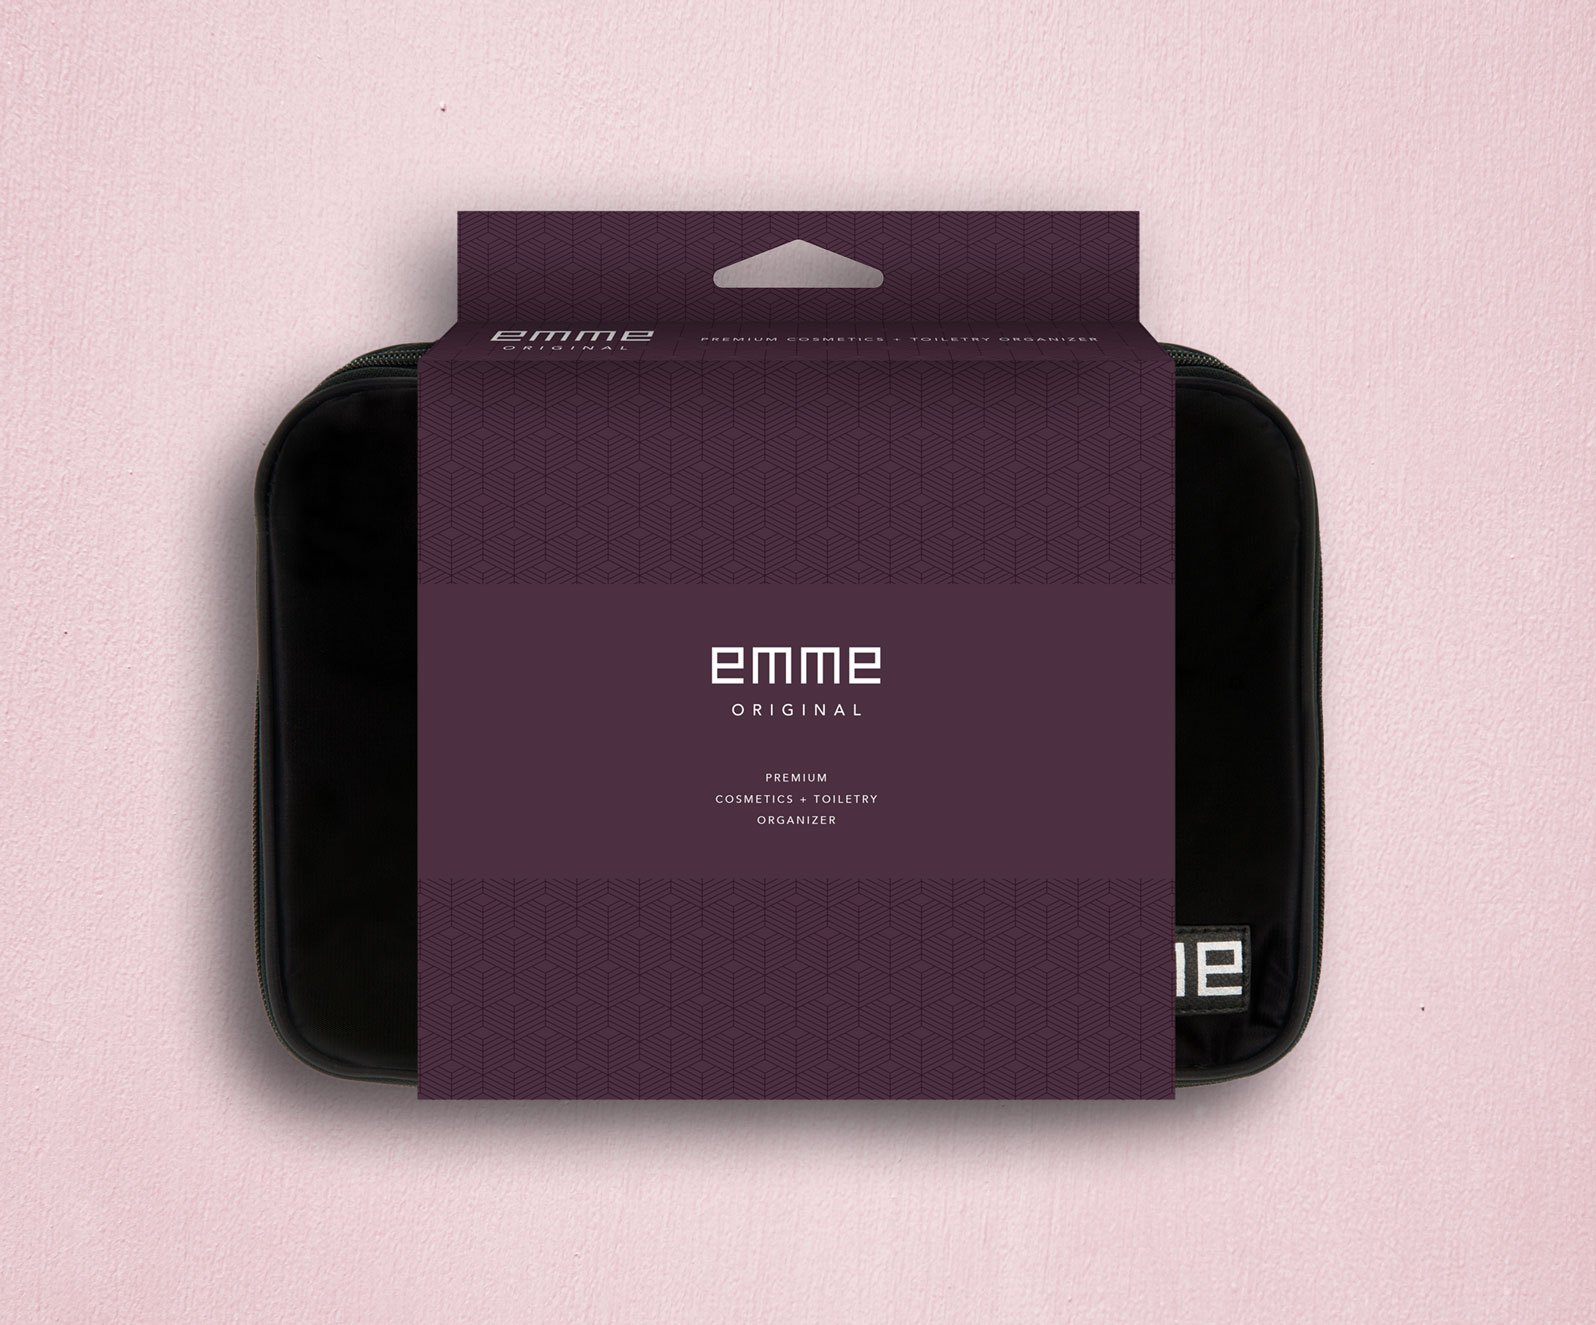 EMME Original packaging design by Ashley Lewis